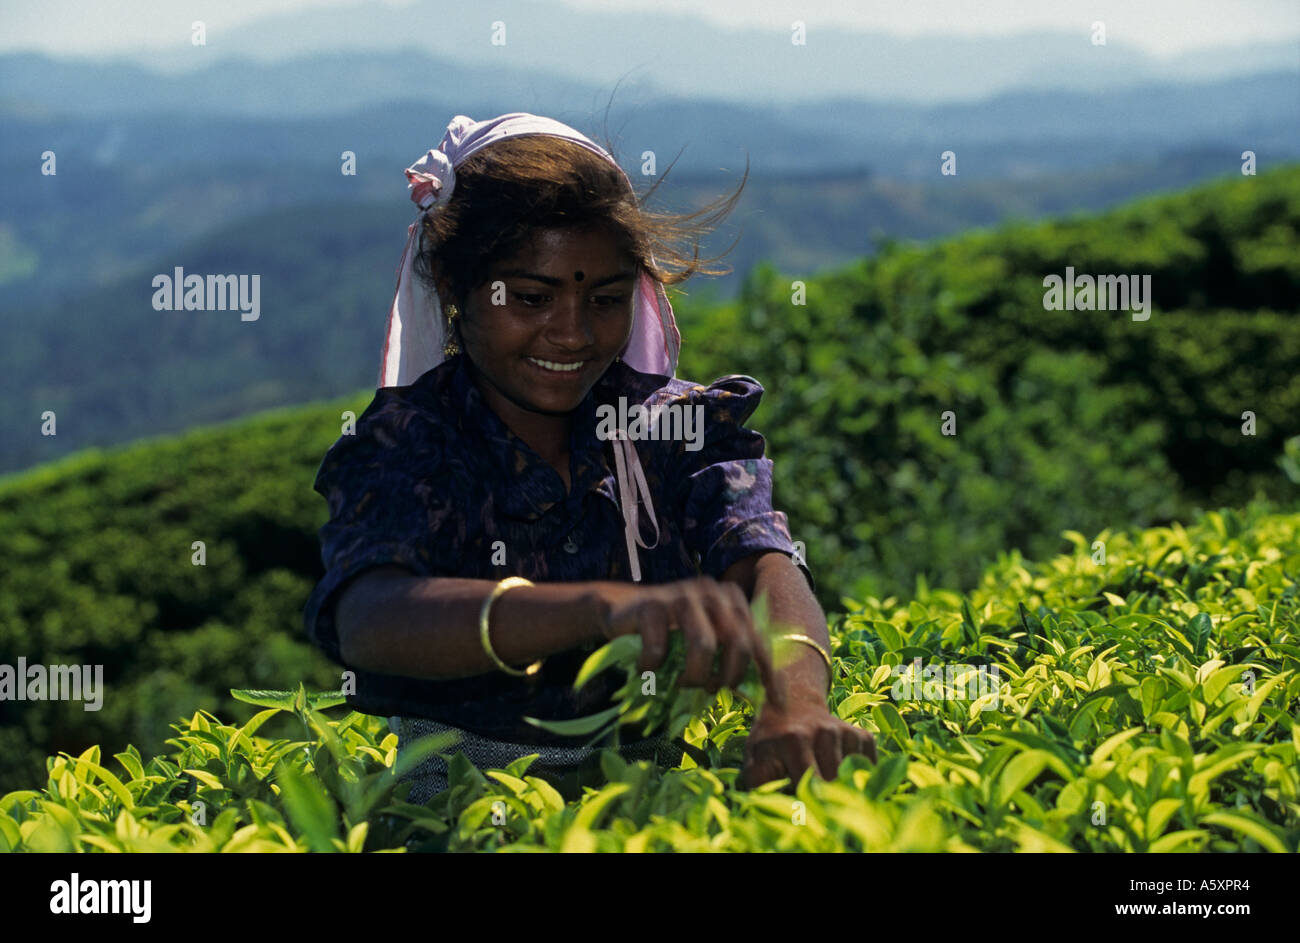 Eine junge tamilische Frau Ernte Tee Blätter (Camellia Sinensis). Jeune Femme Tamoule Displays des Feuilles de Thé. Stockfoto